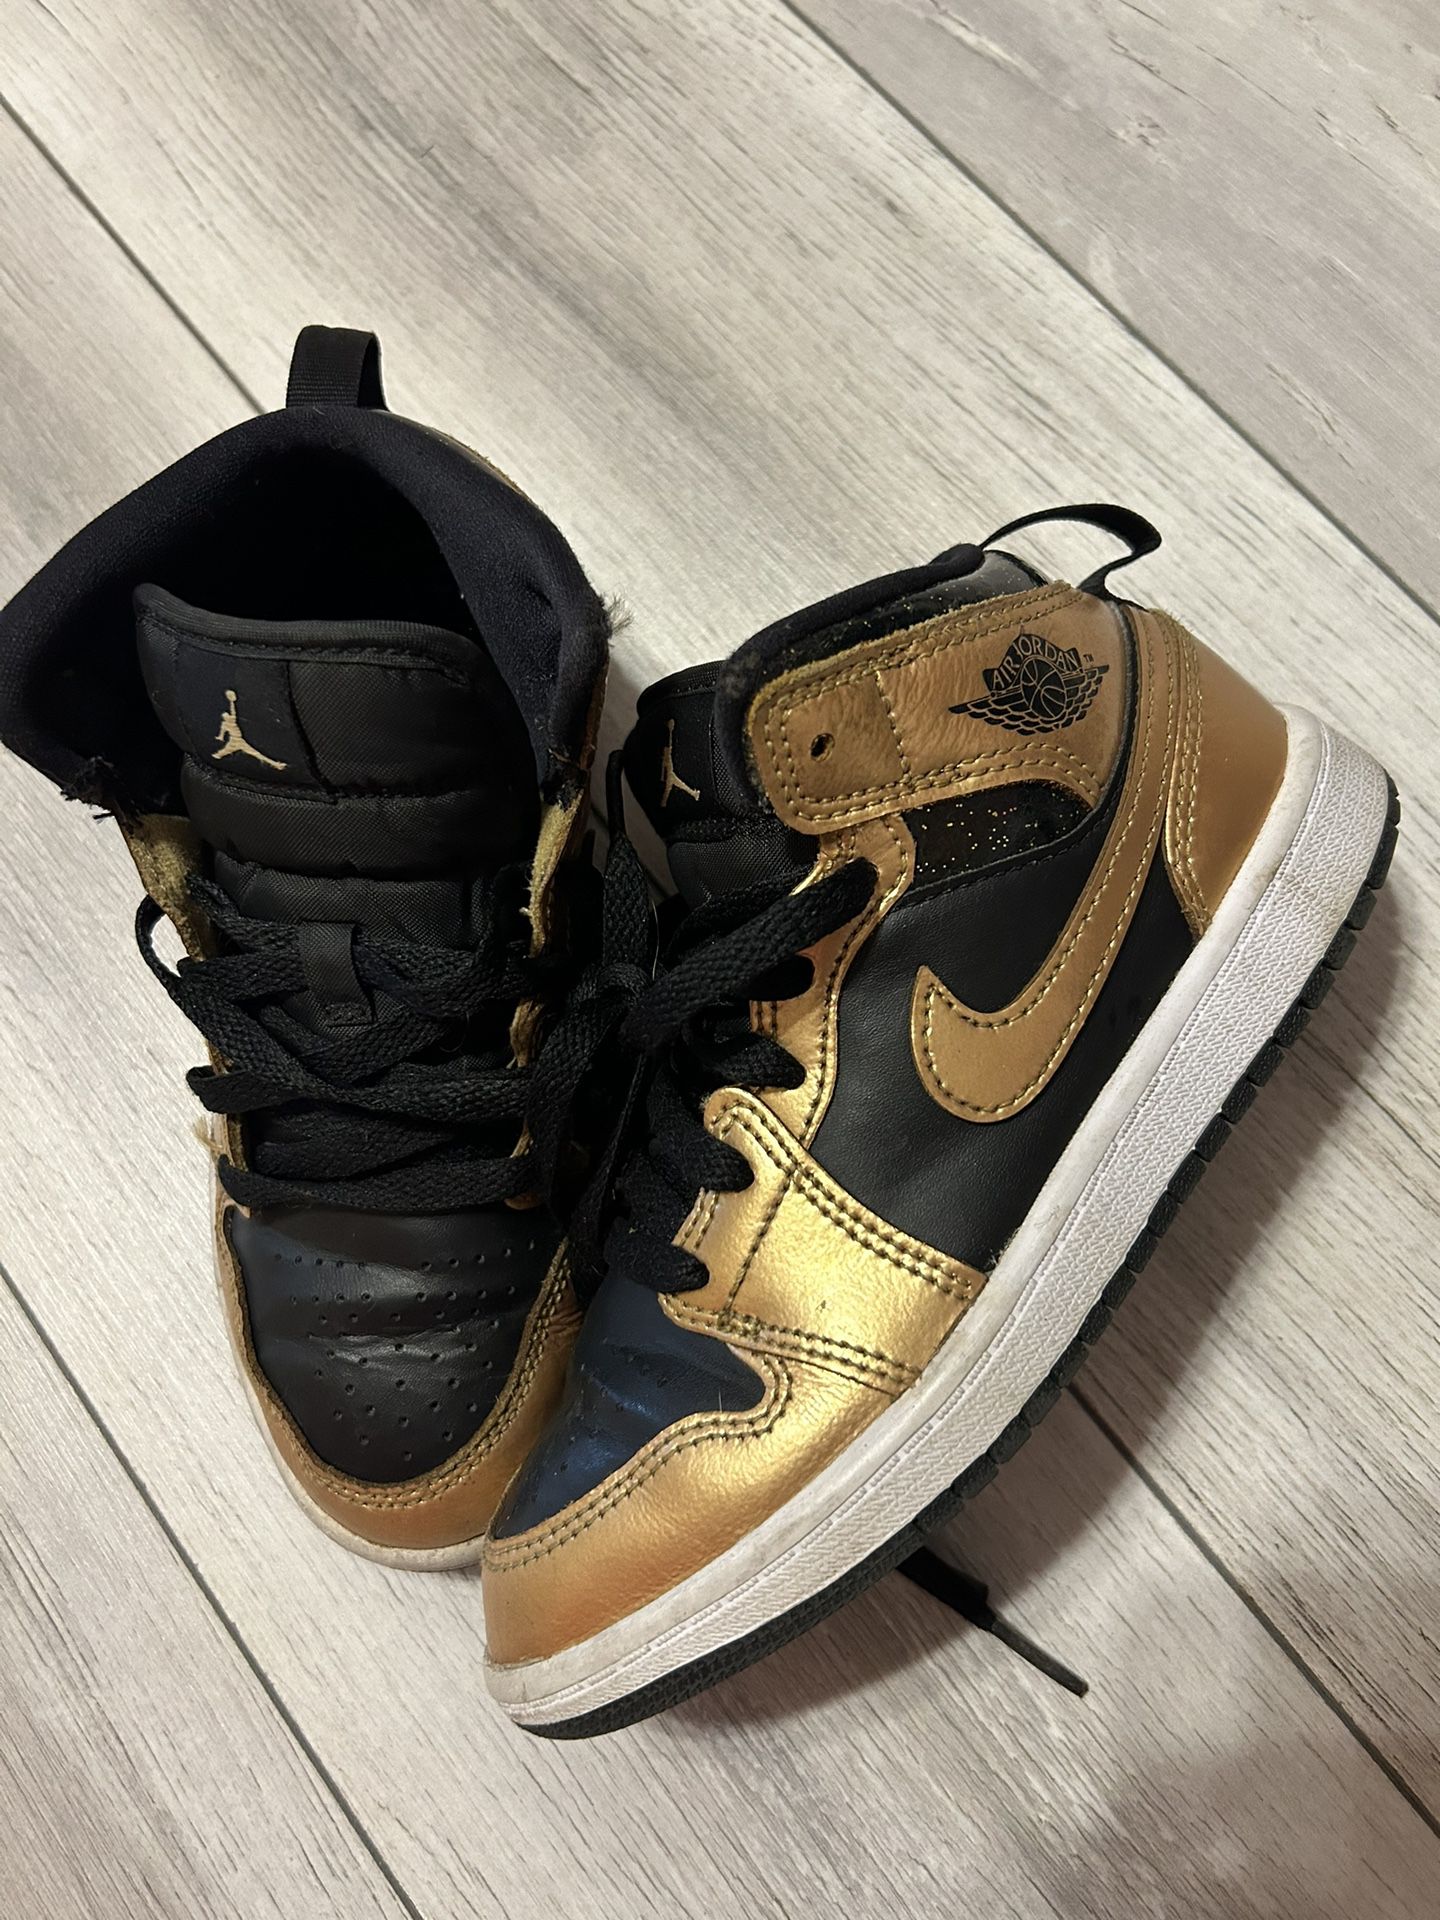 Nike Jordan’s-$40